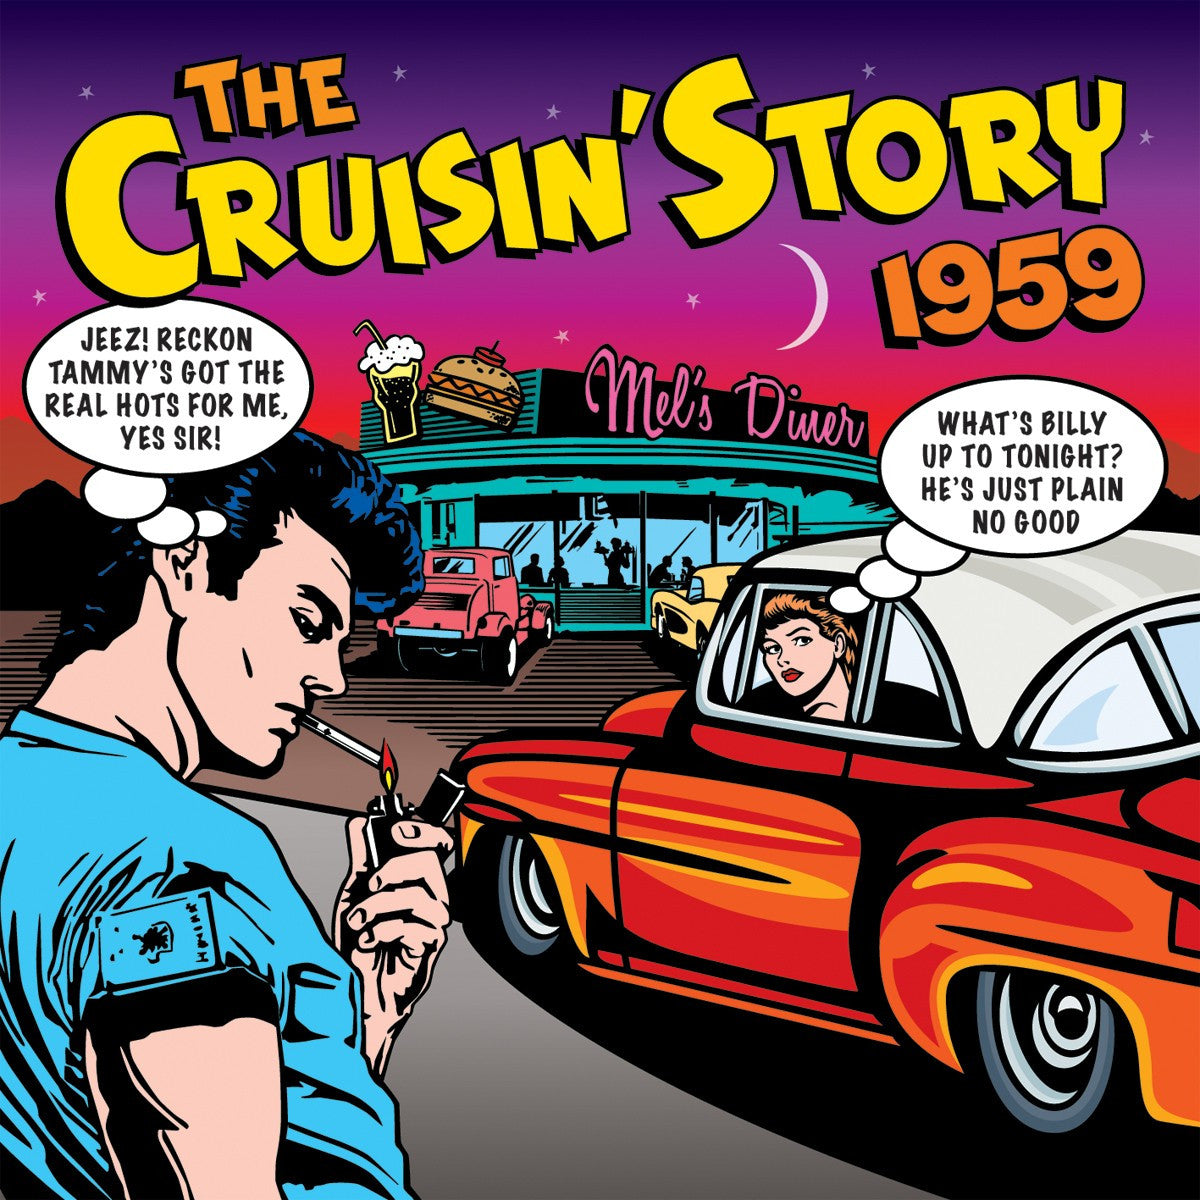 CRUISIN STORY 1959-VARIOUS ARTISTS 2CD *NEW*